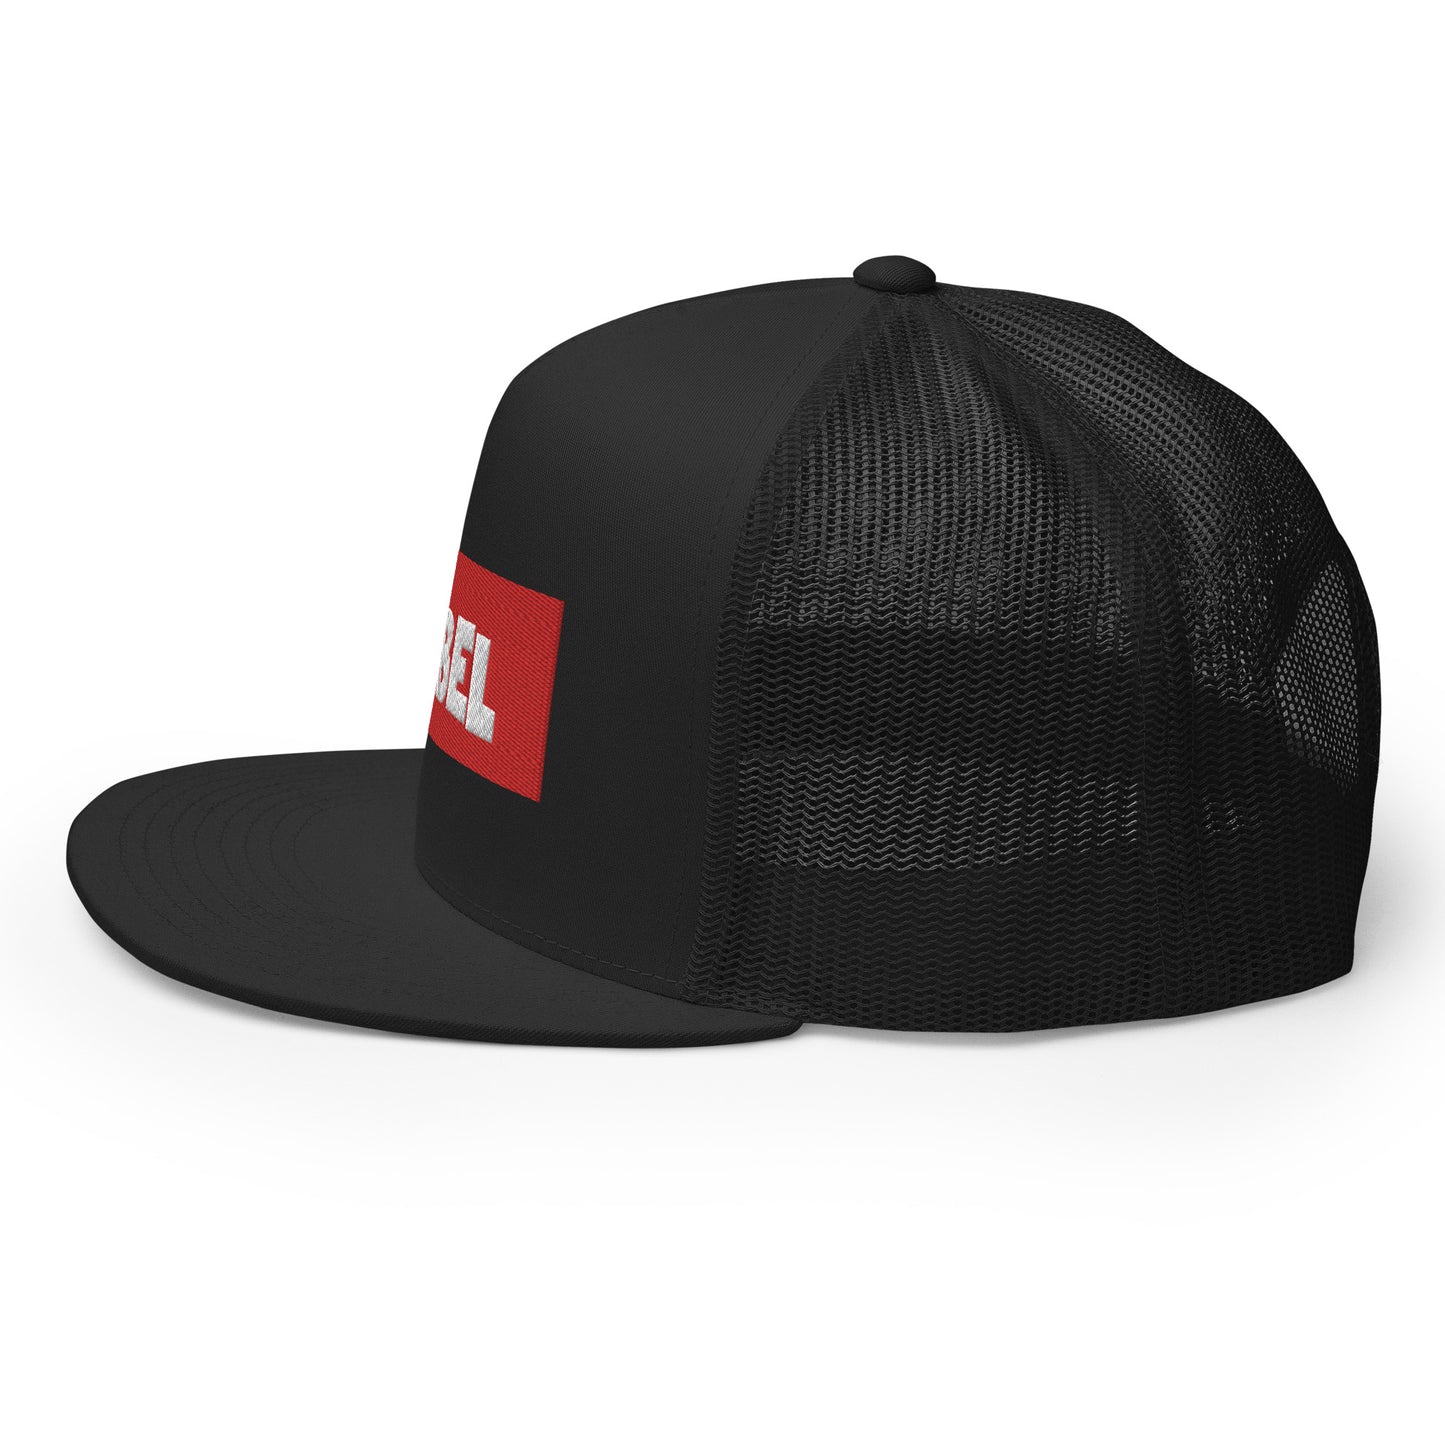 Ubel Brand / #01 / Hat / Red Box Logo / Trucker Cap